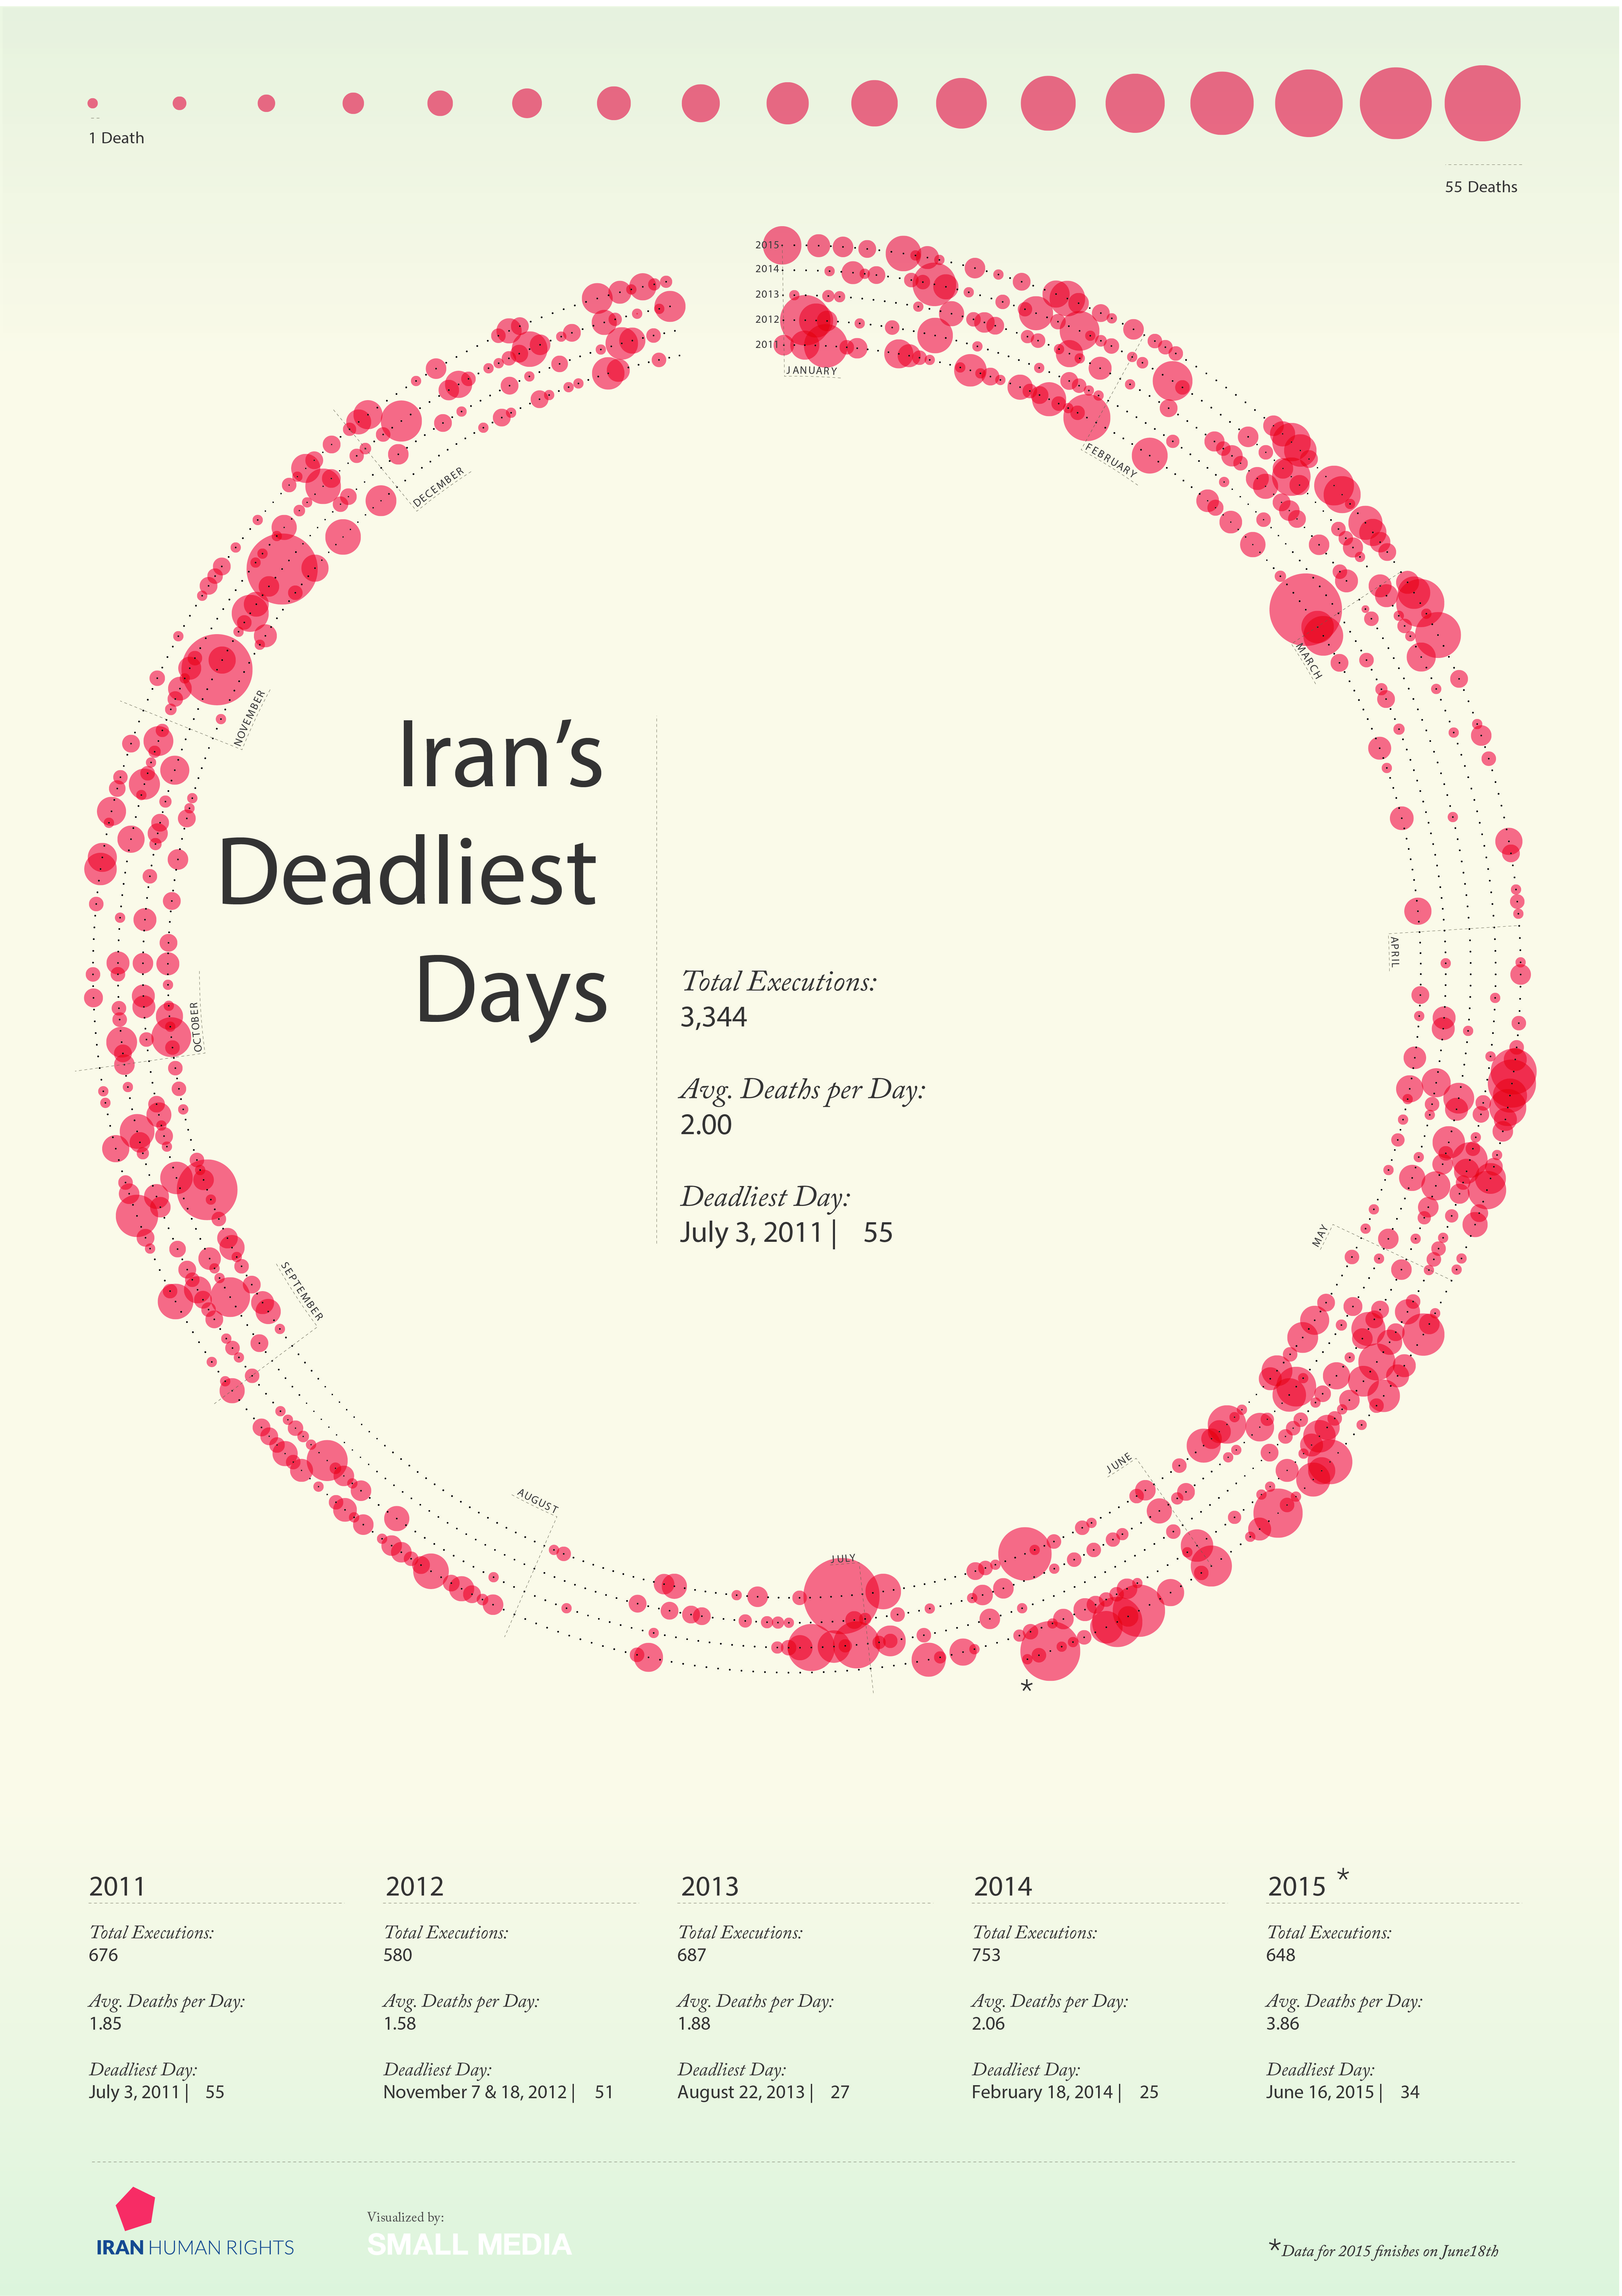 Iran's deadliest days